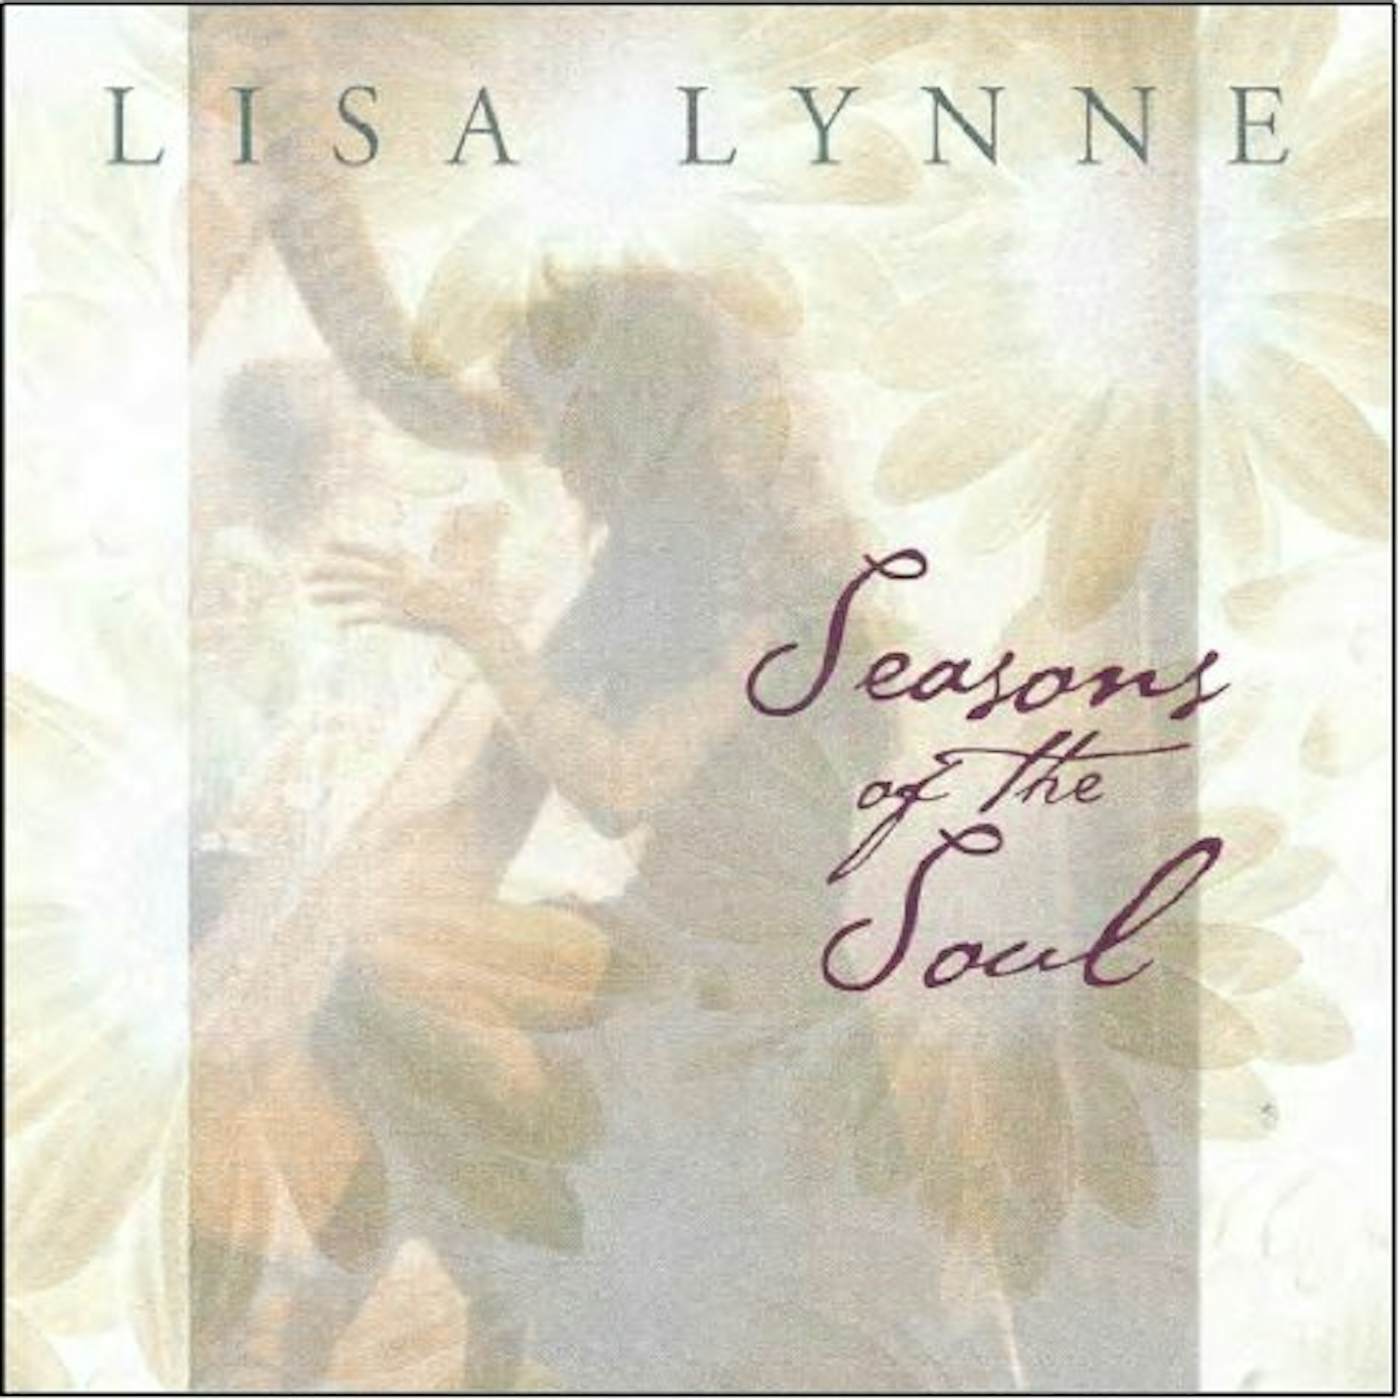 Lisa Lynne SEASONS OF THE SOUL CD